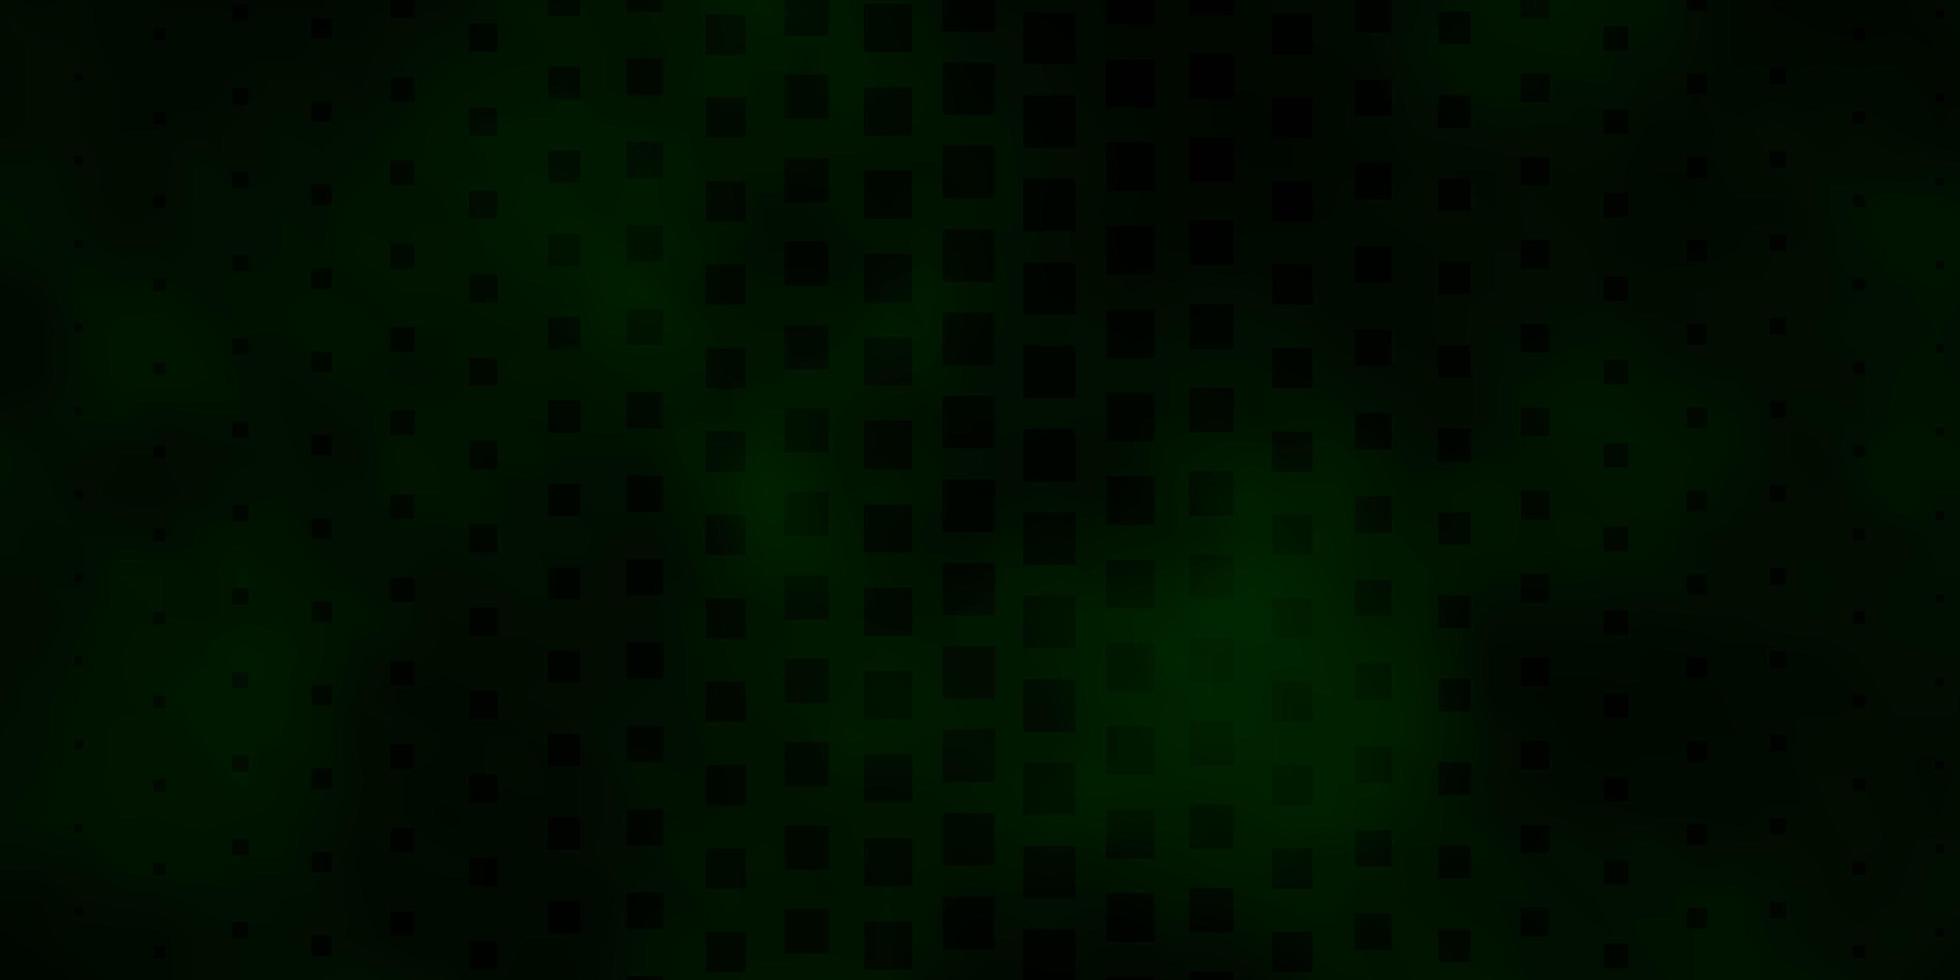 Telón de fondo de vector verde oscuro con rectángulos.